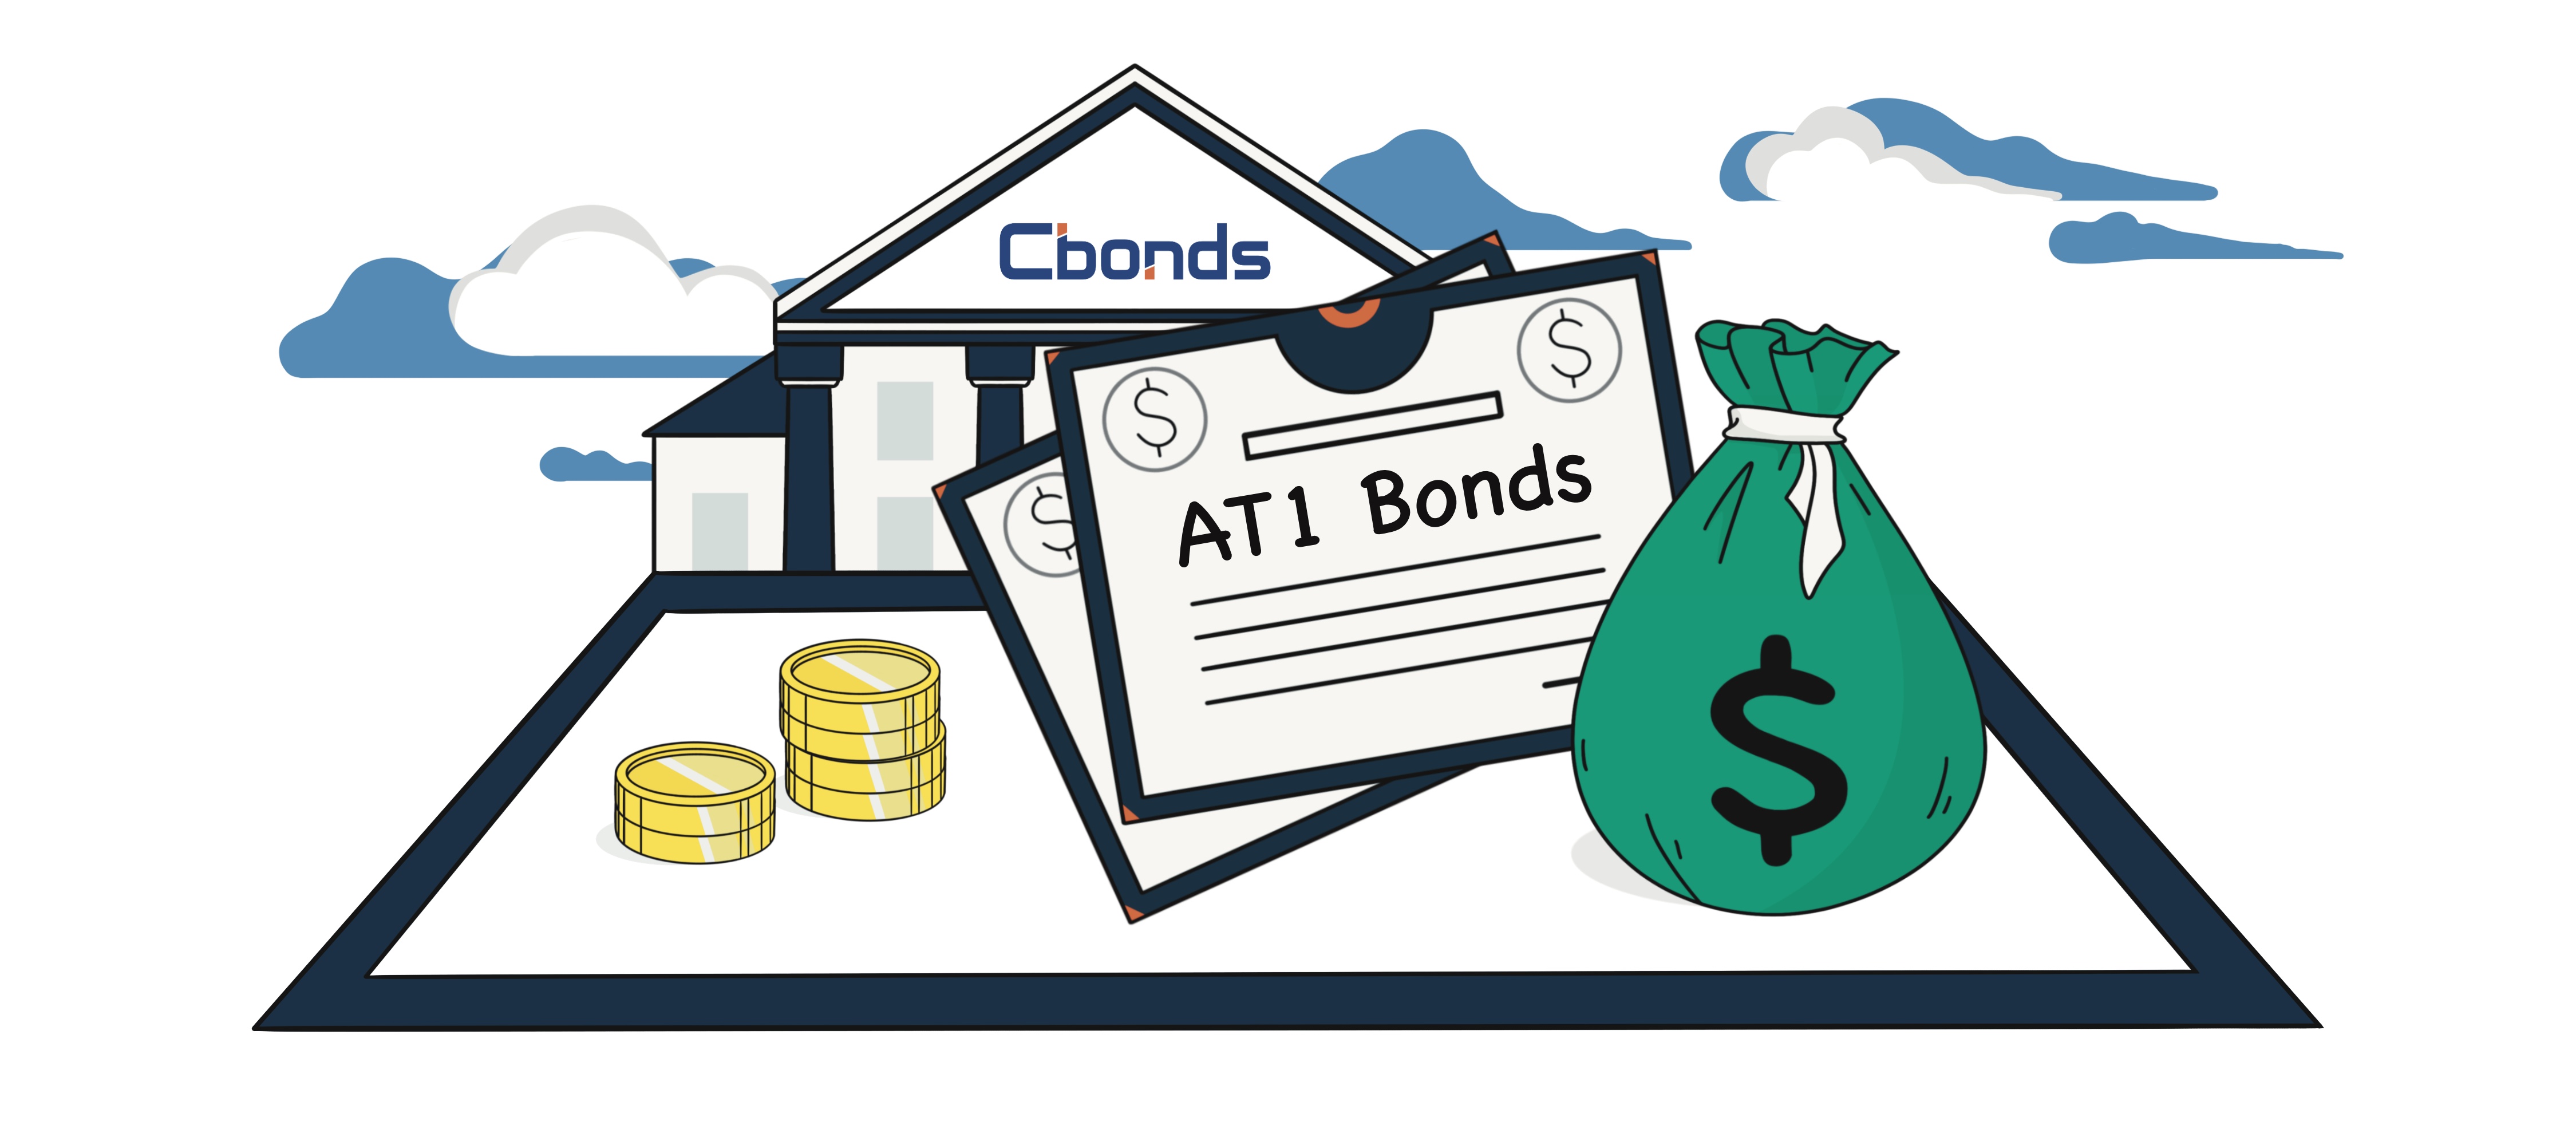 AT1 Bonds